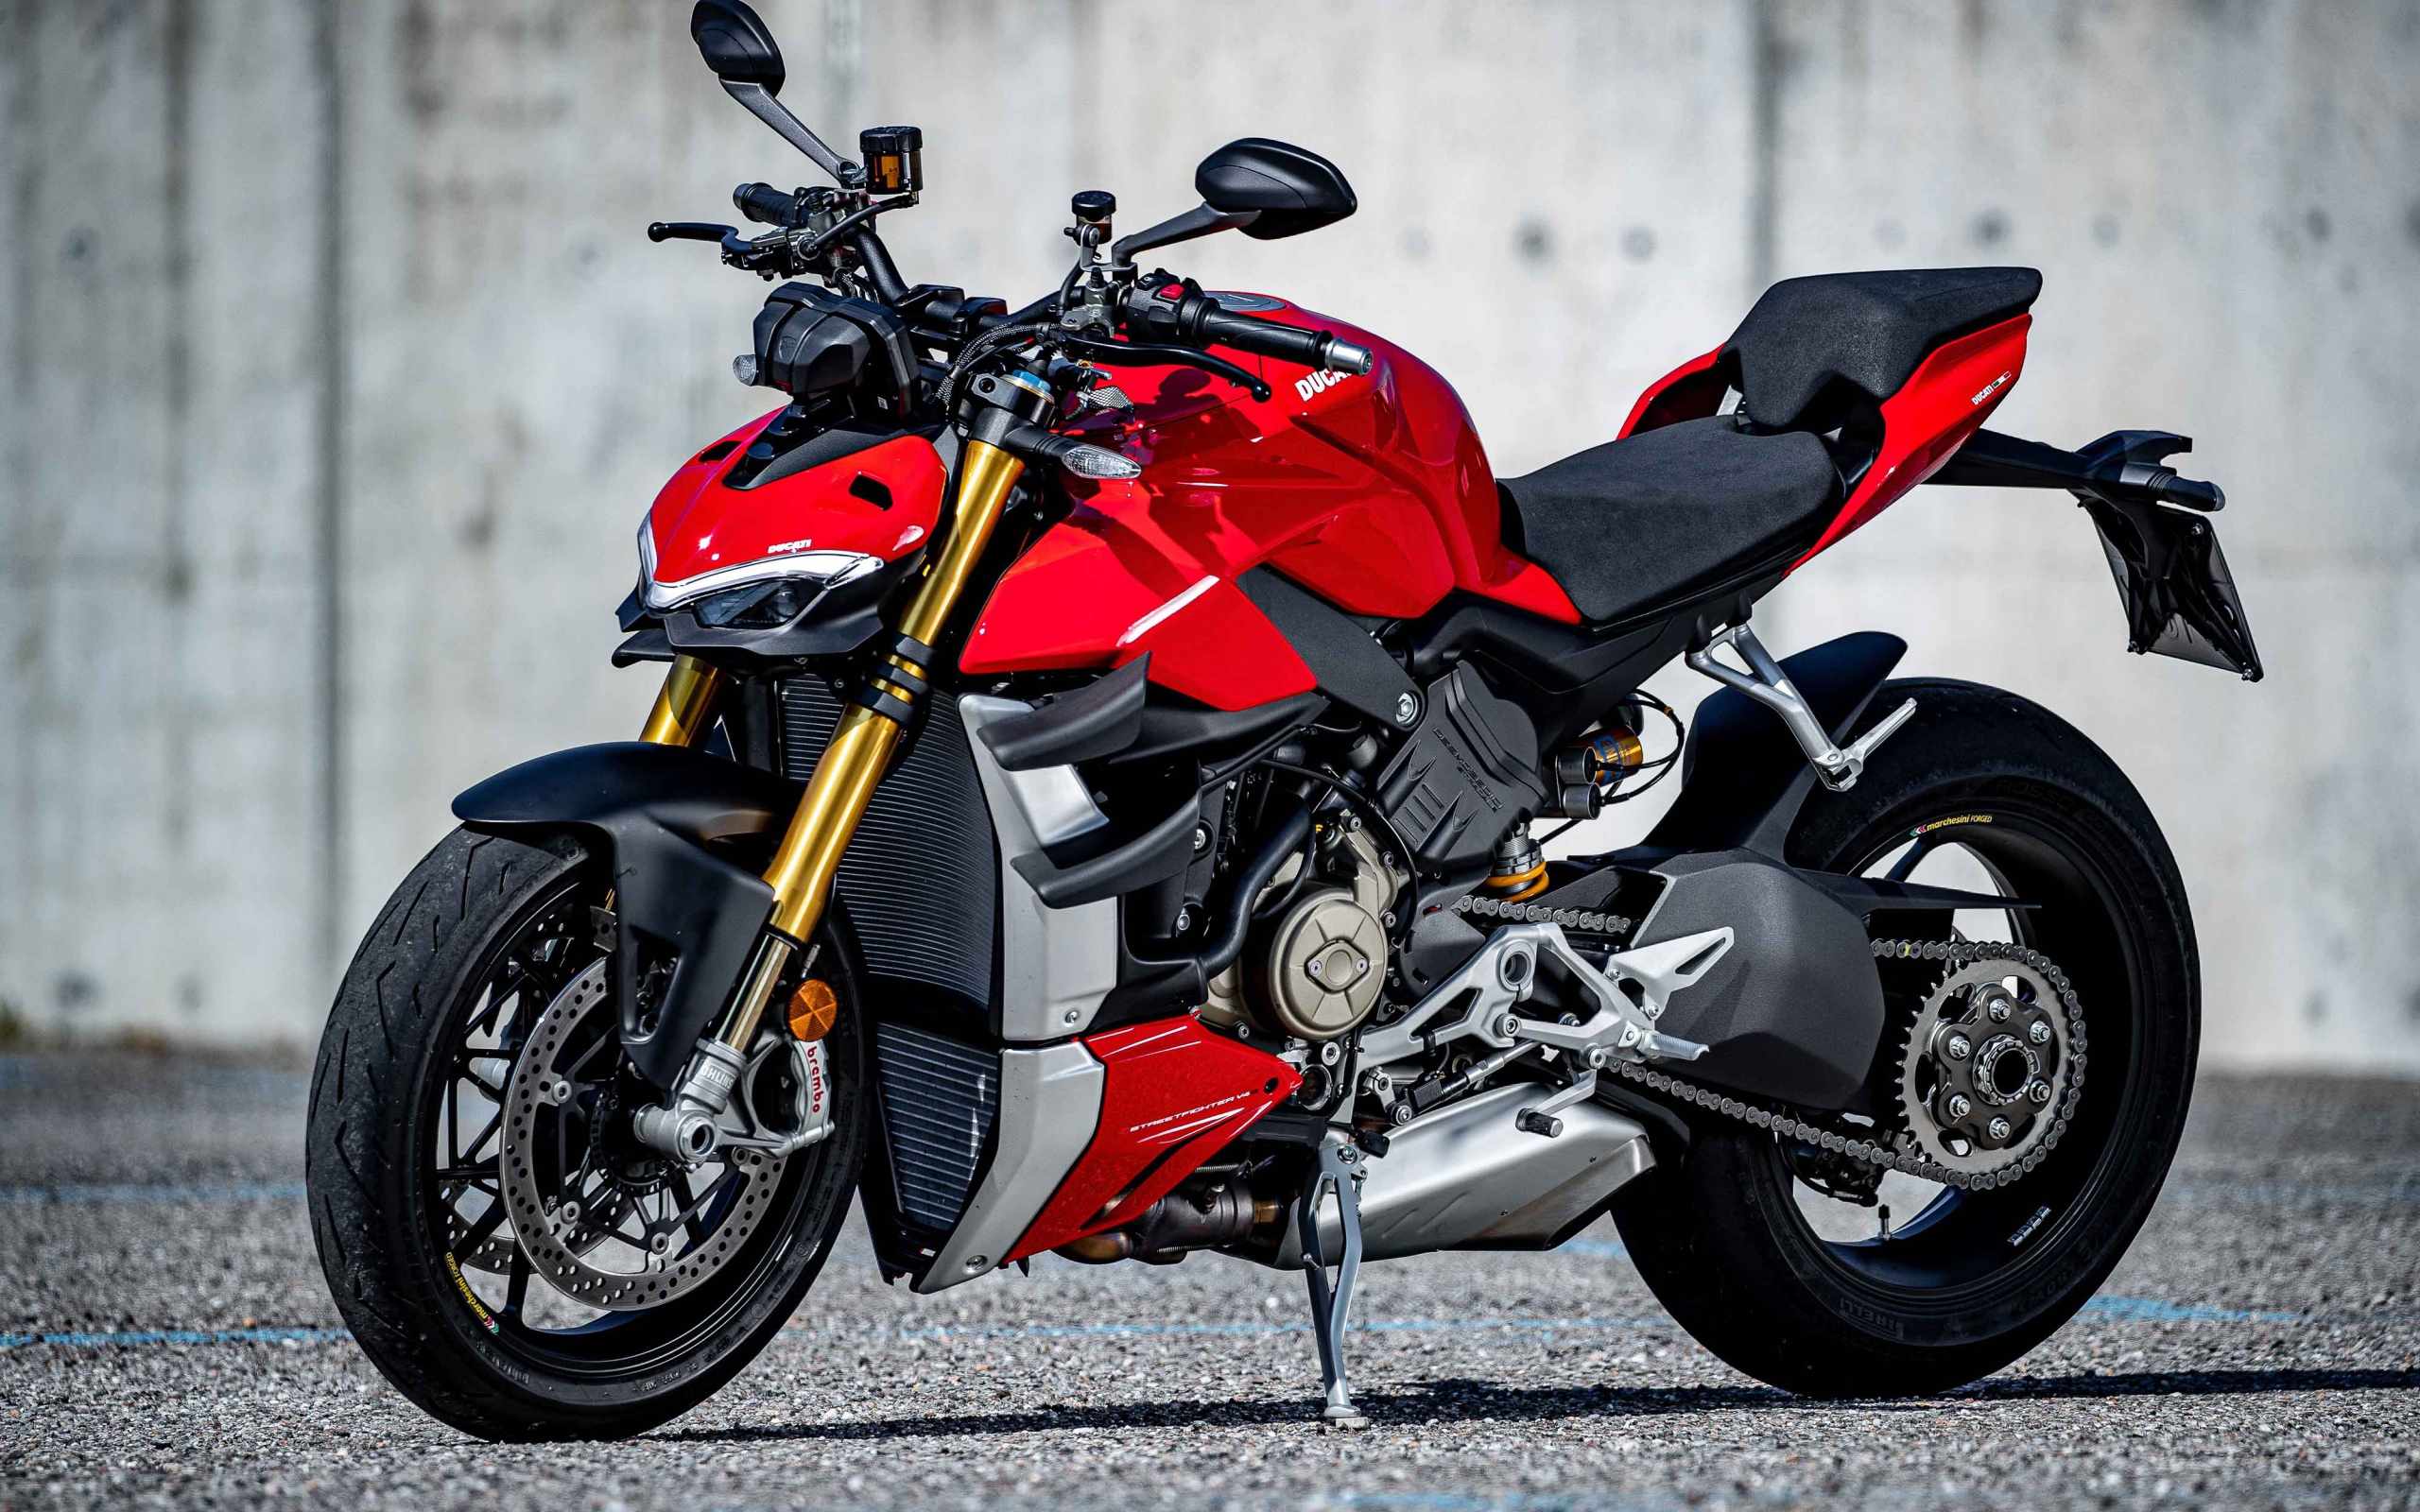 Красный быстрый новый мотоцикл Ducati V4 Streetfighter, 2021 года